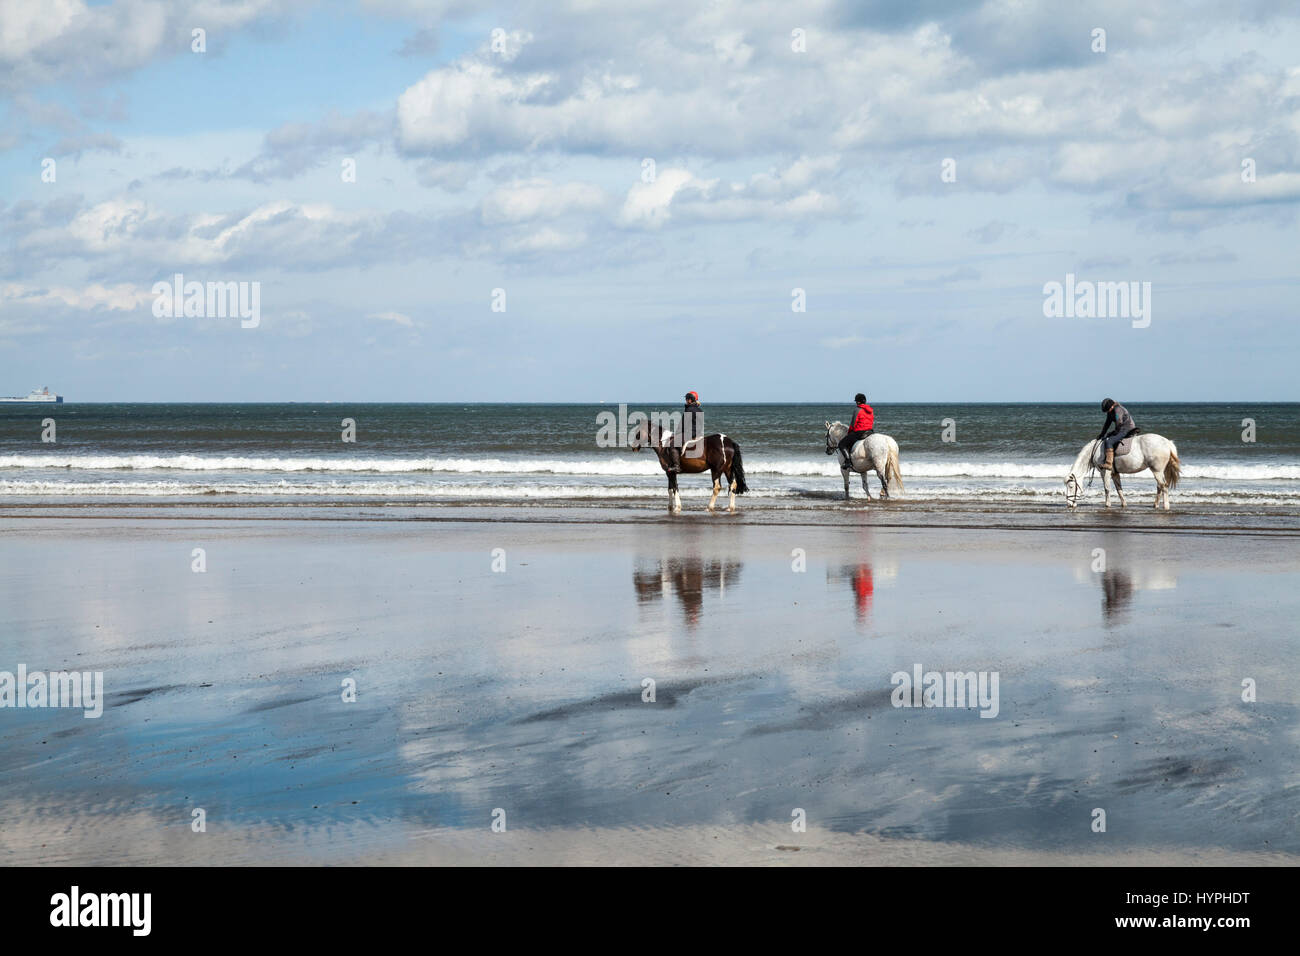 Three women on horseback on Saltburn beach on north east coast of England, UK Stock Photo